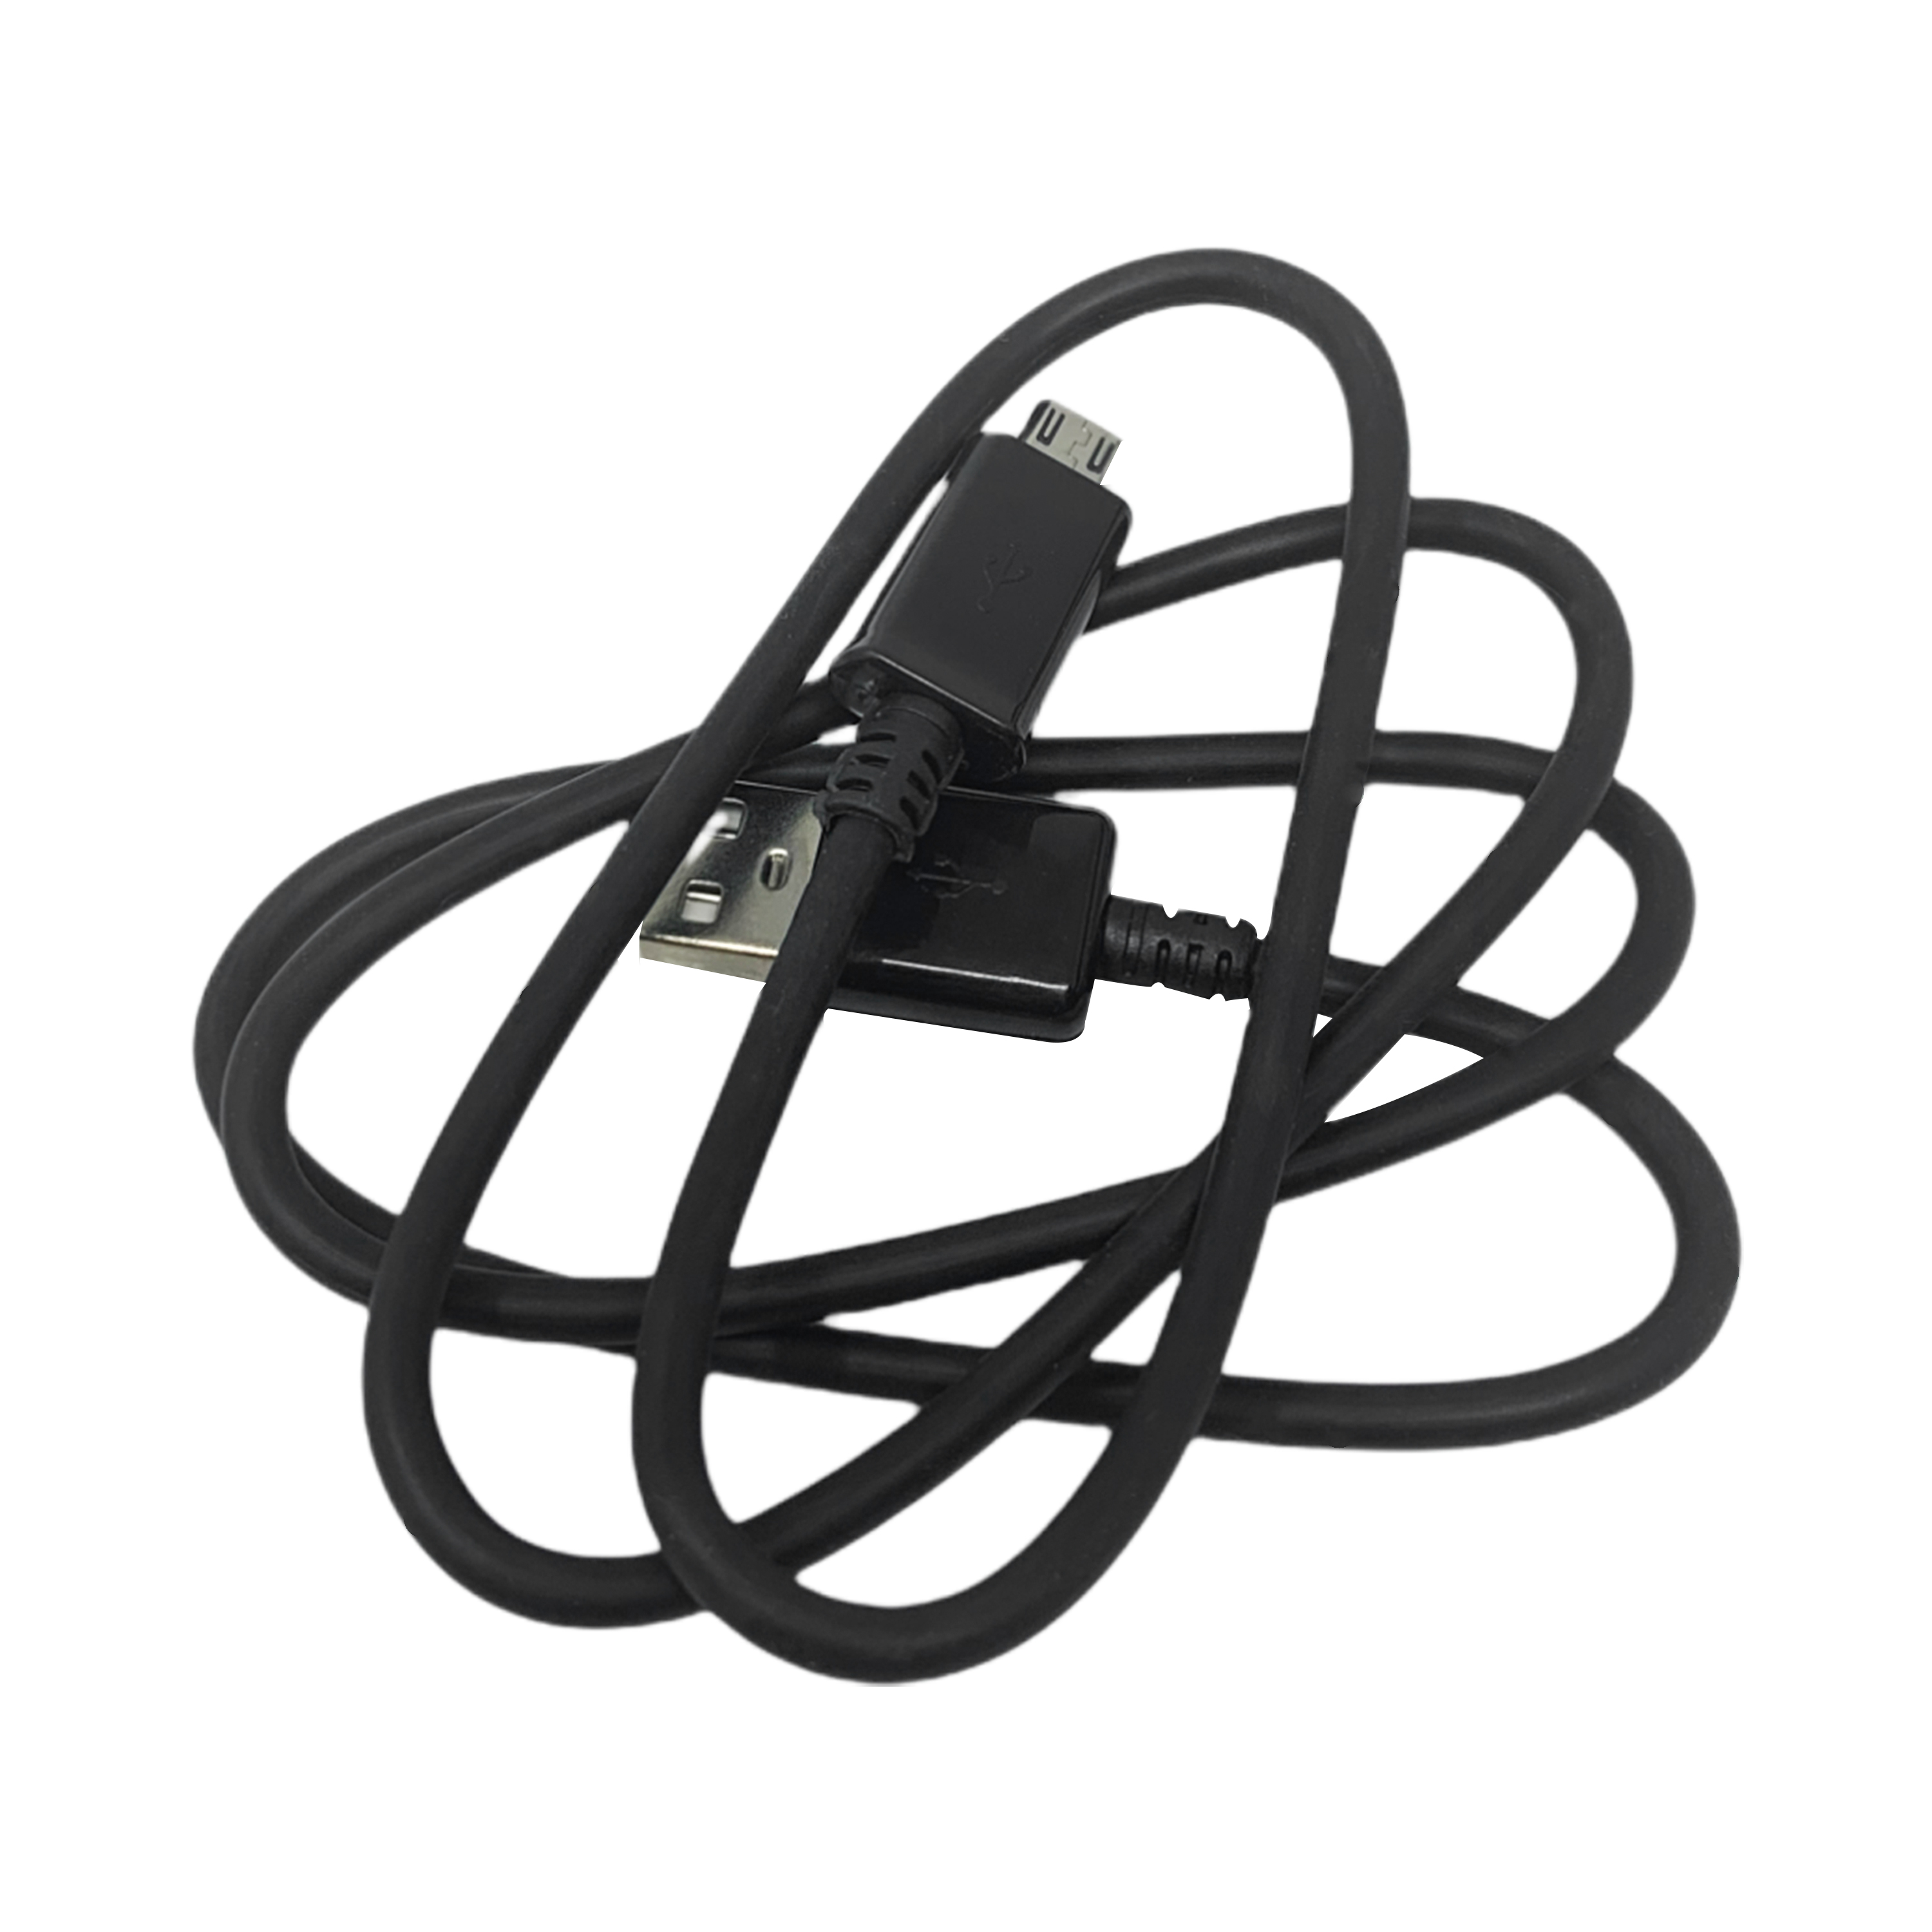 Kabel, Schwarz Micro USB HBASICS Ladekabel,